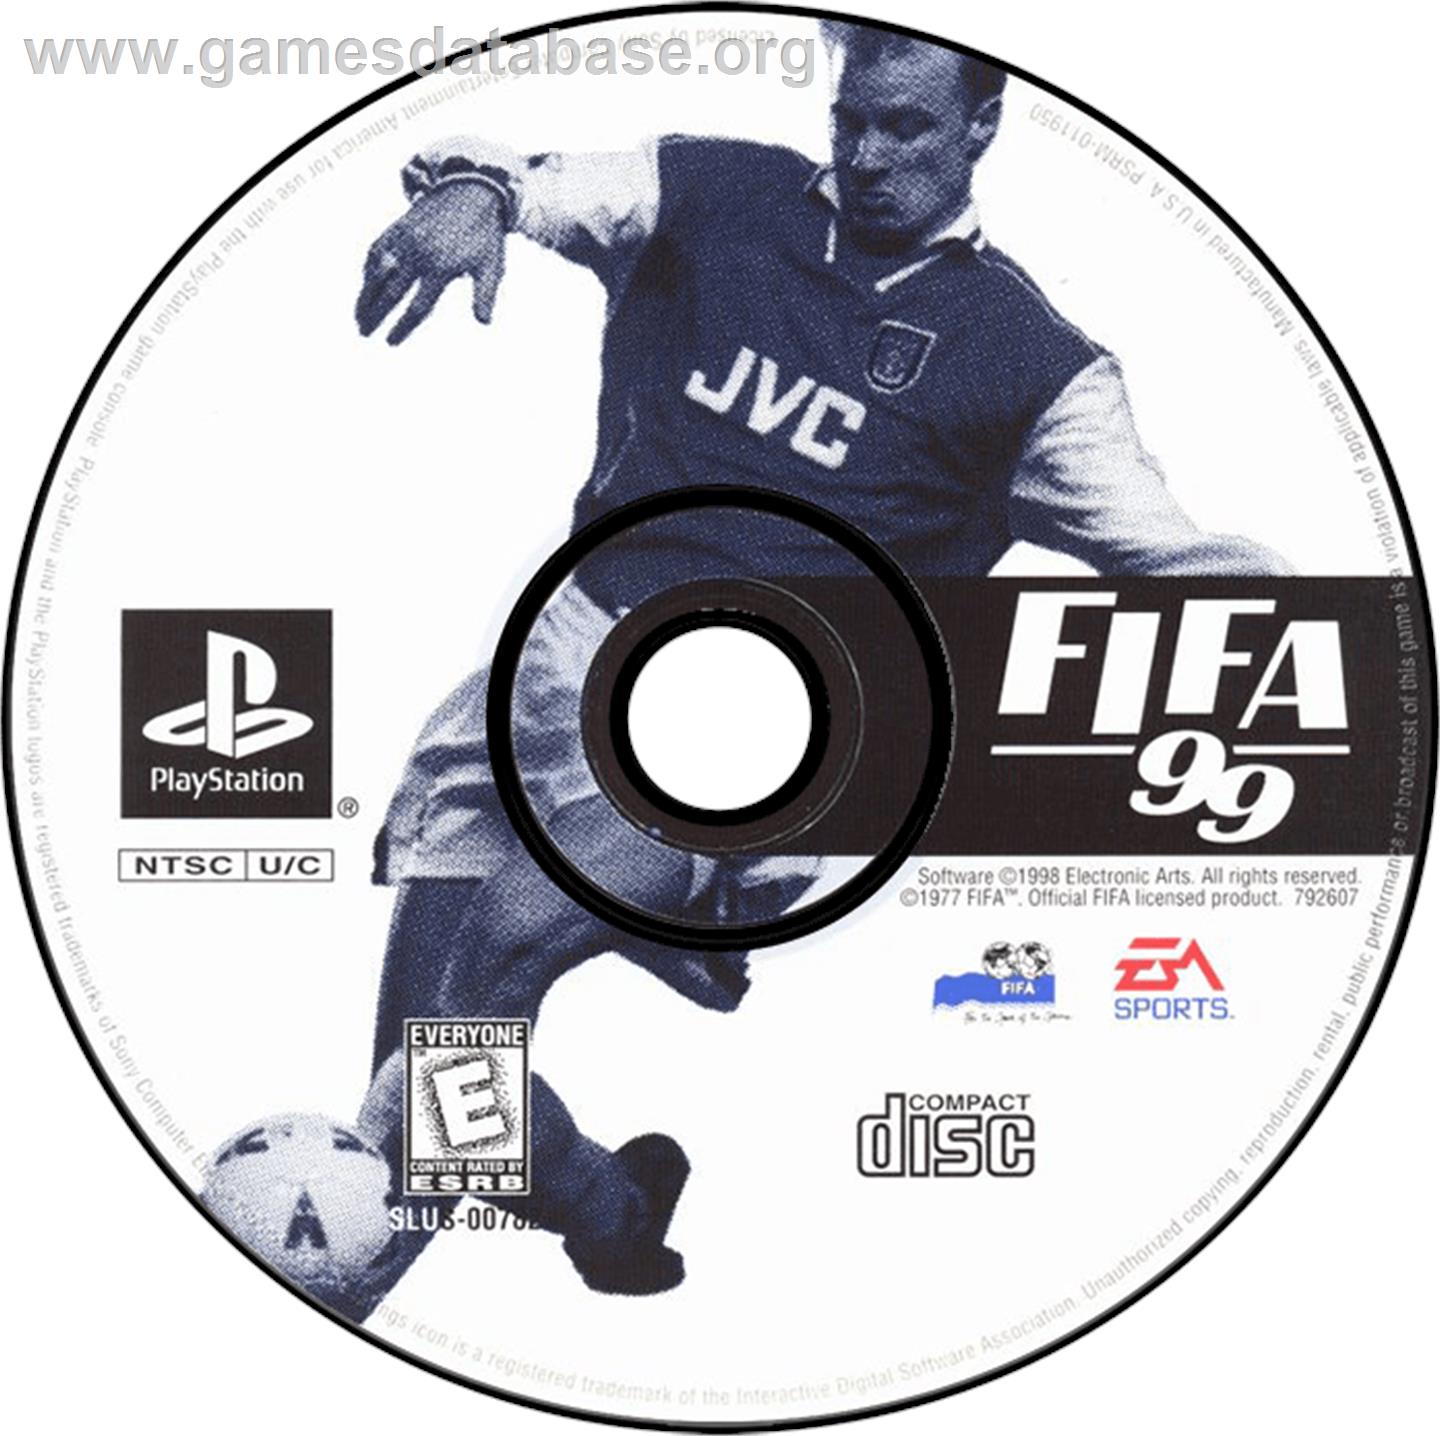 FIFA 99 - Sony Playstation - Artwork - Disc